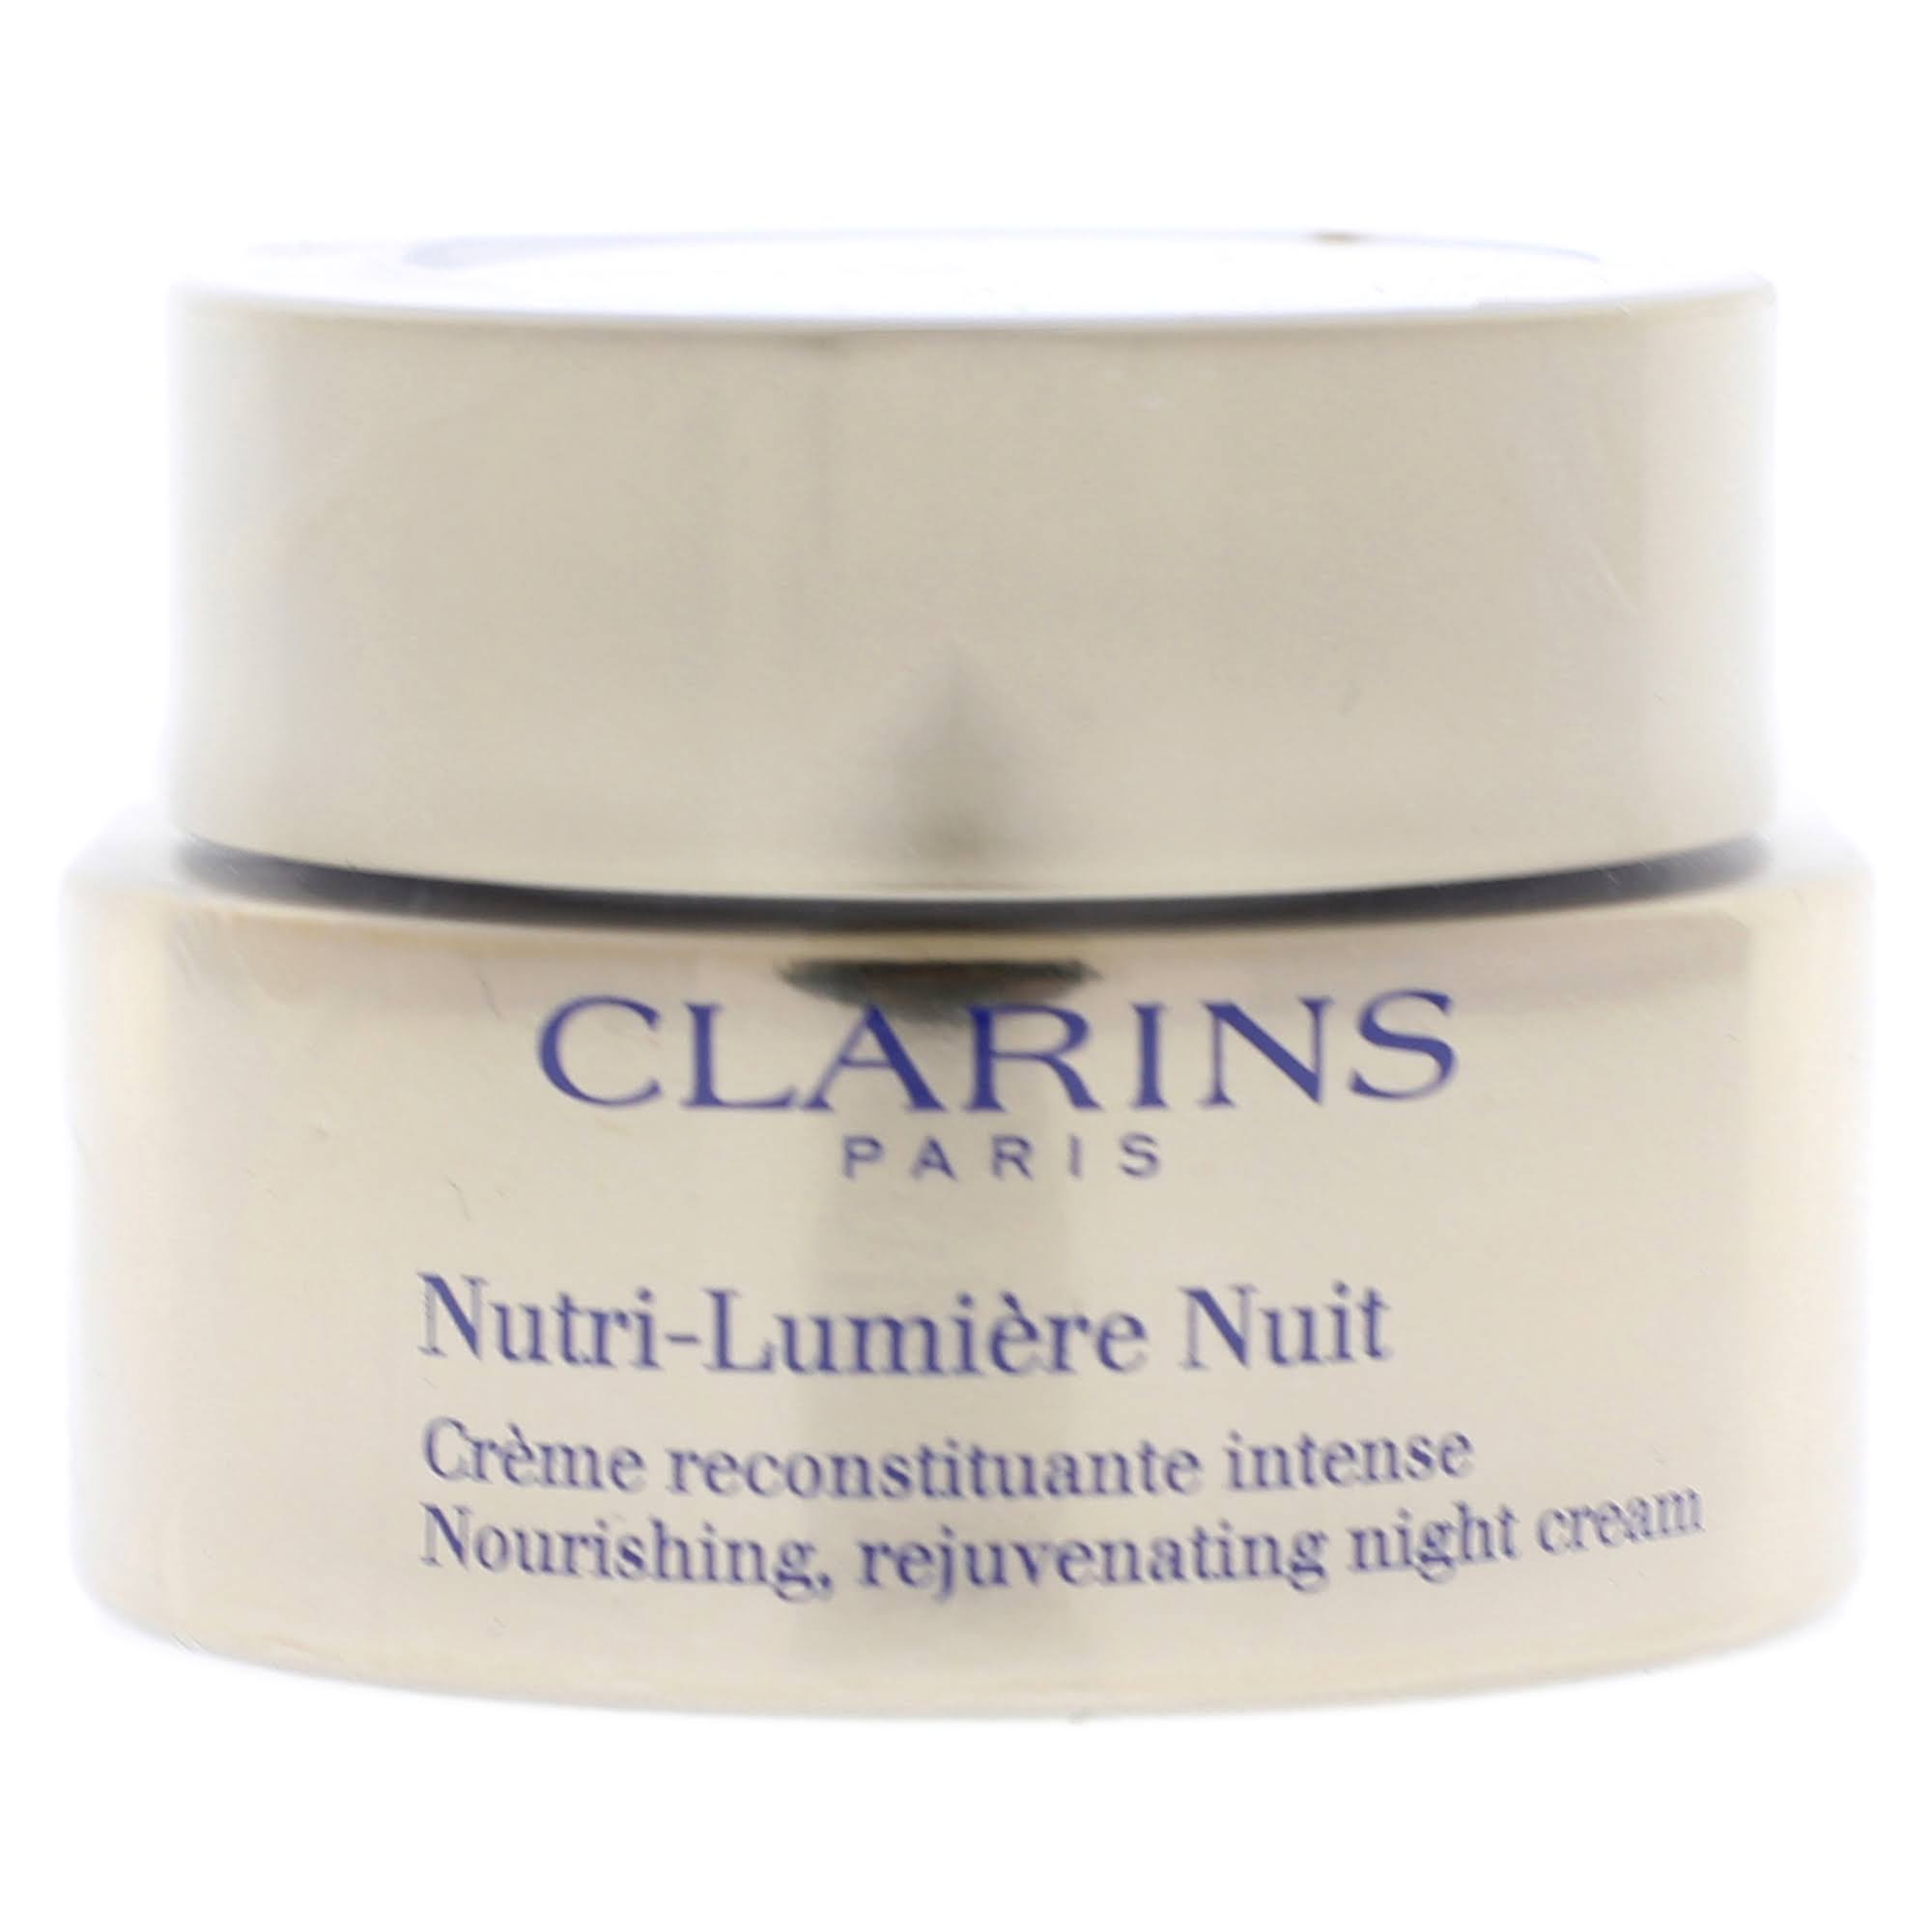 Nutri Lumiere Night Cream 50ml - Clarins